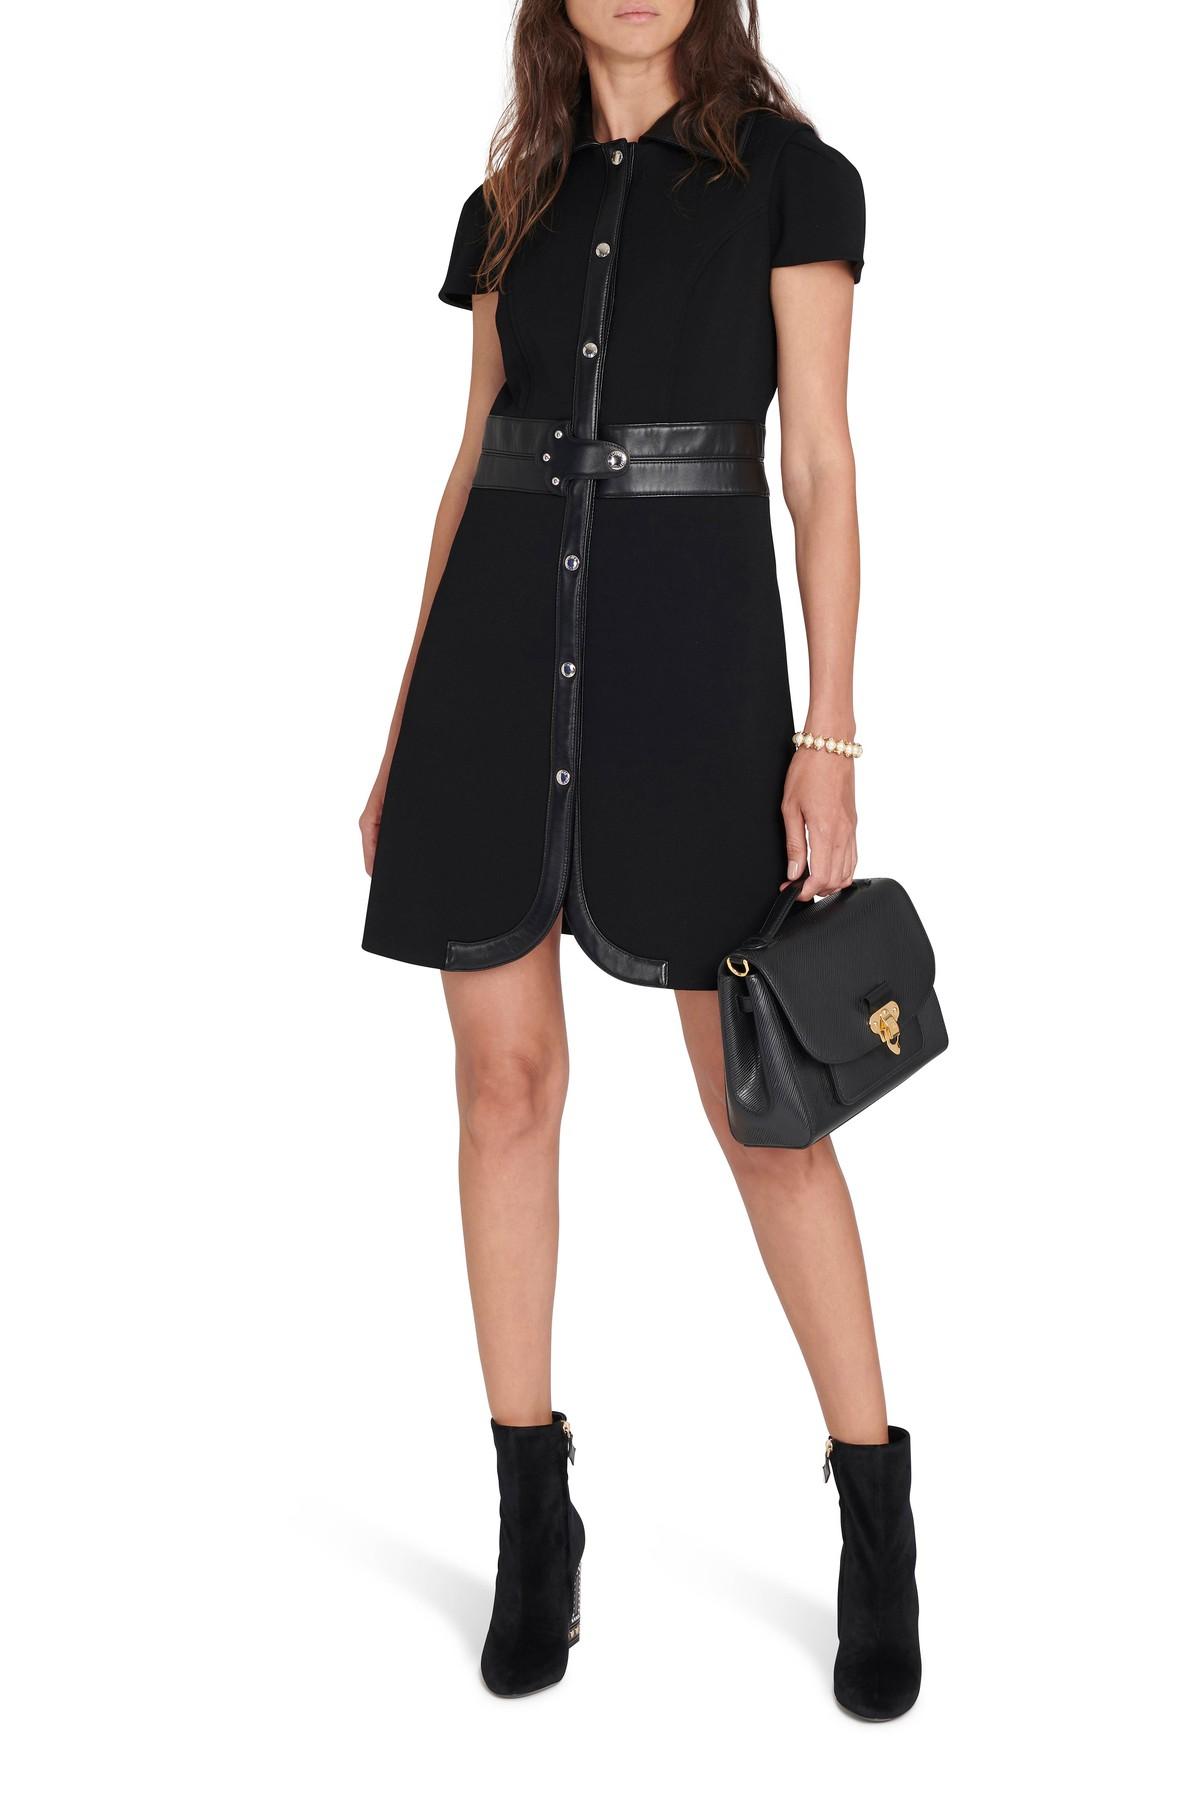 Black little dress louis vuitton bag outfit 20199, BeSugarandSpice